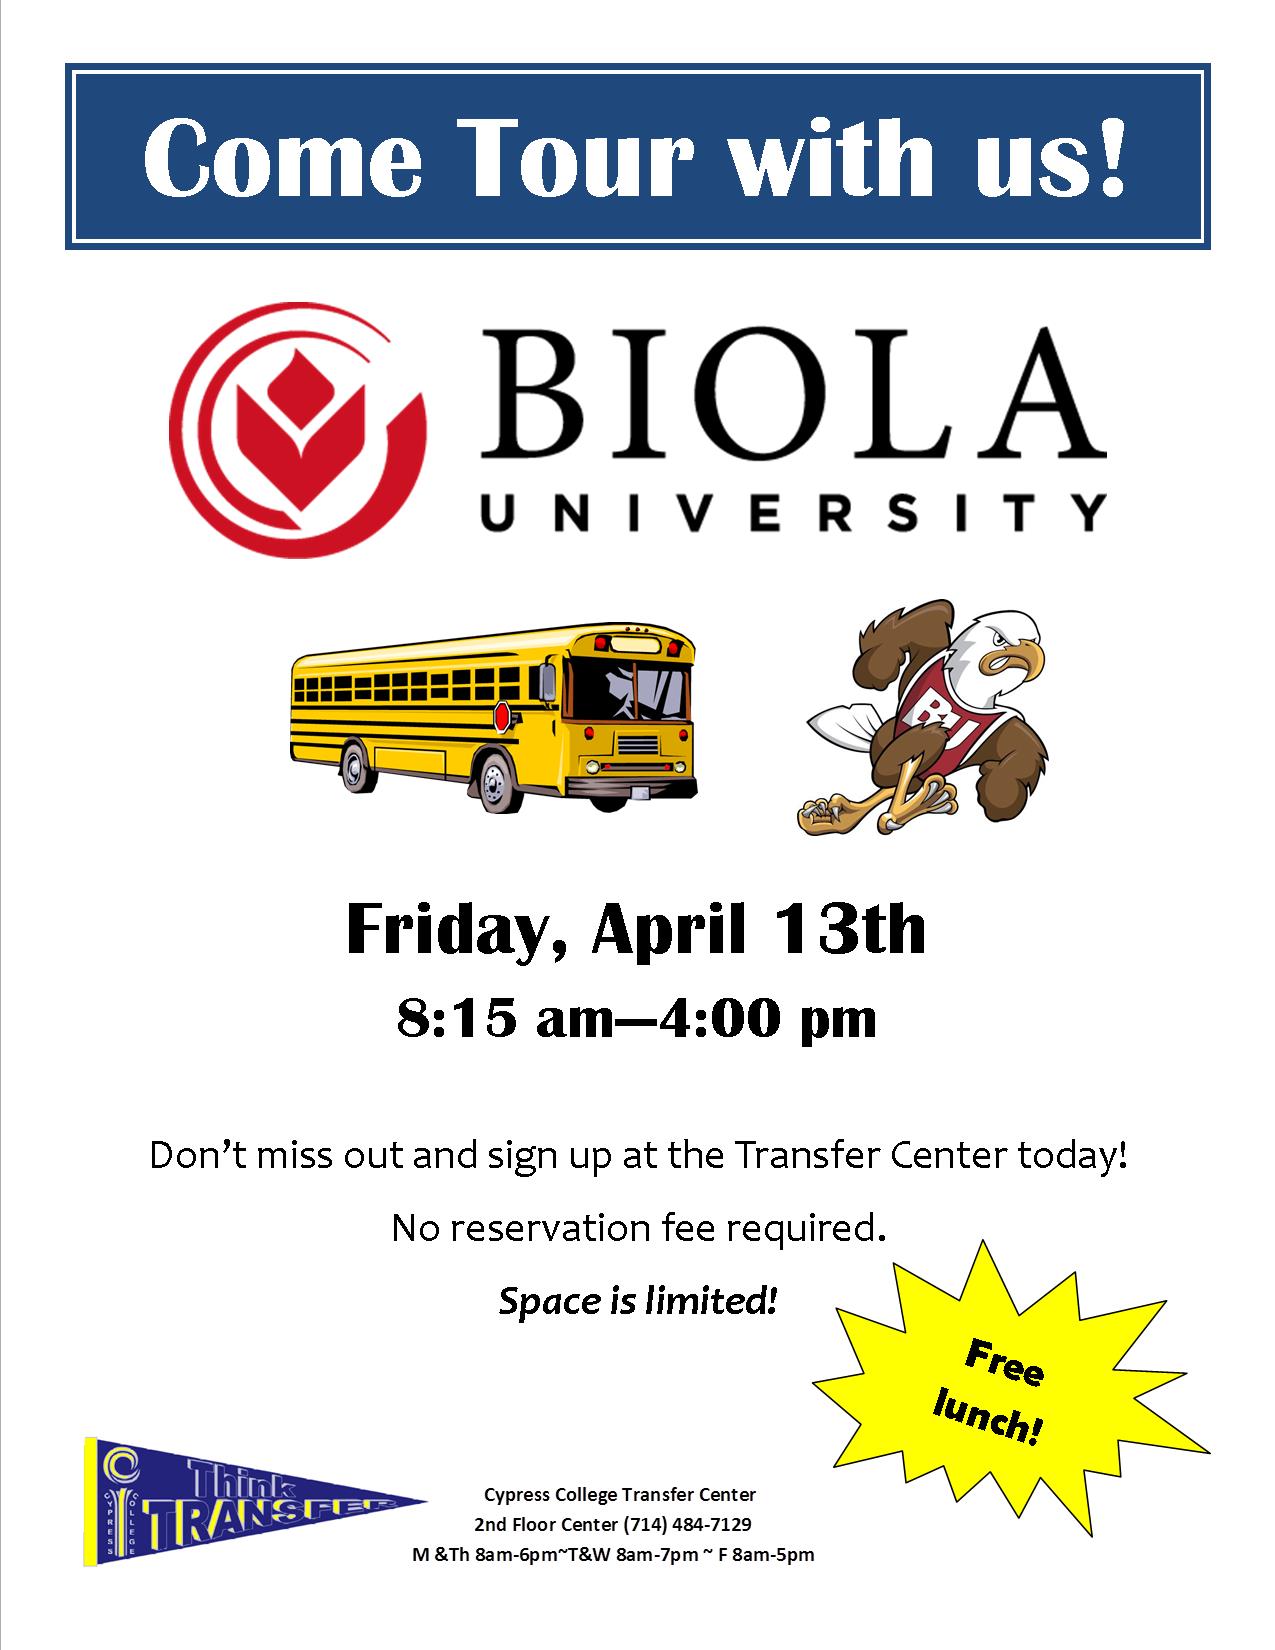 Bus tour to Biola University flyer